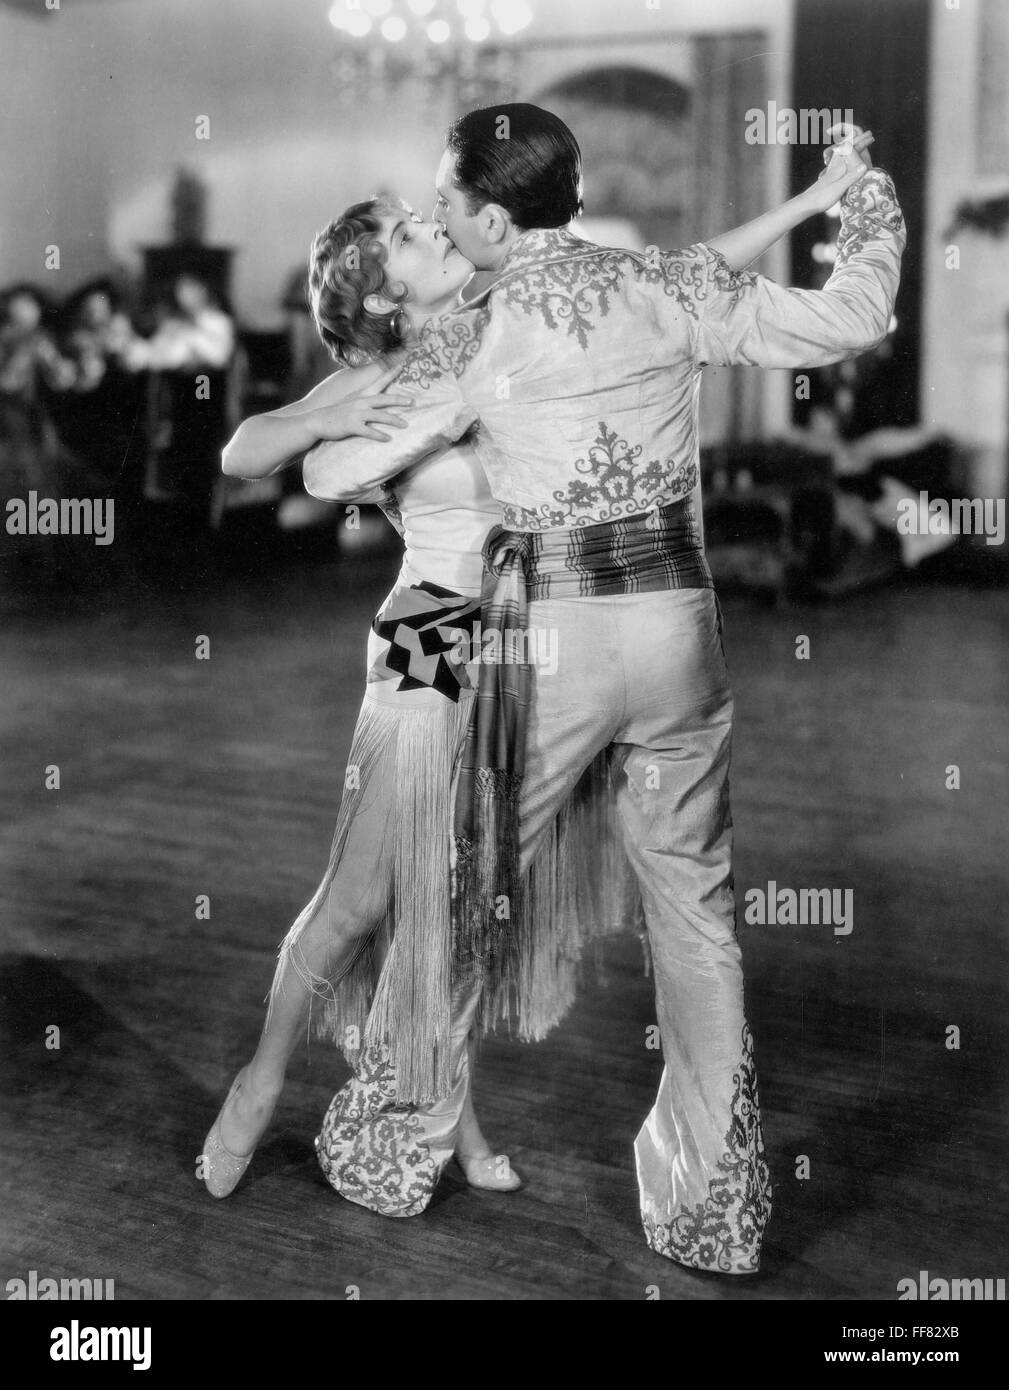 DANCING THE TANGO/nin the 1930s. Stock Photo